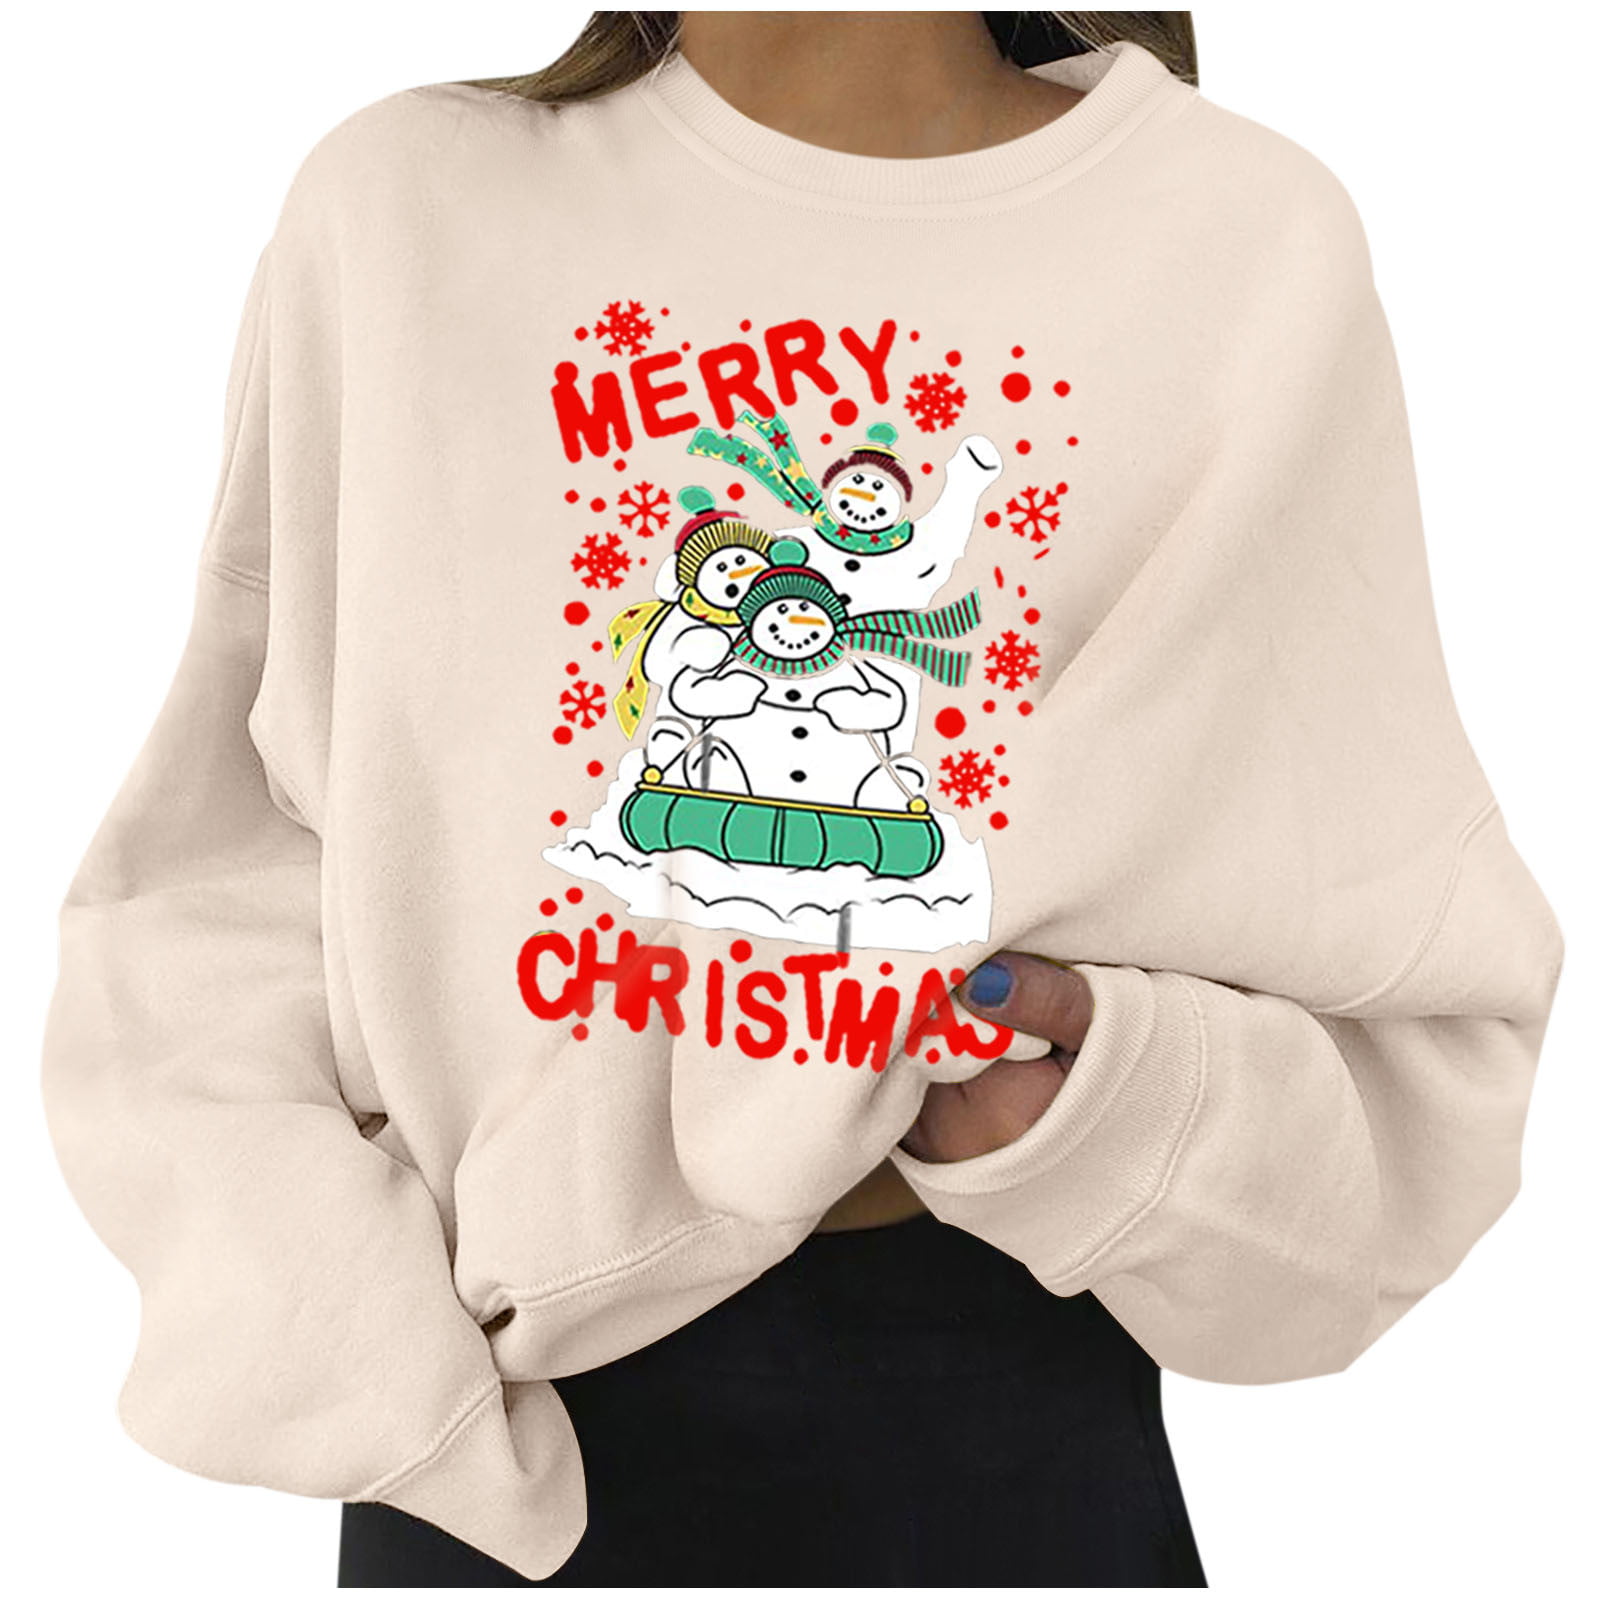 2018 New!!Pullover Tops Blouse Shirt,Women Ladies Christmas Print Long Sleeve Sweatshirt 